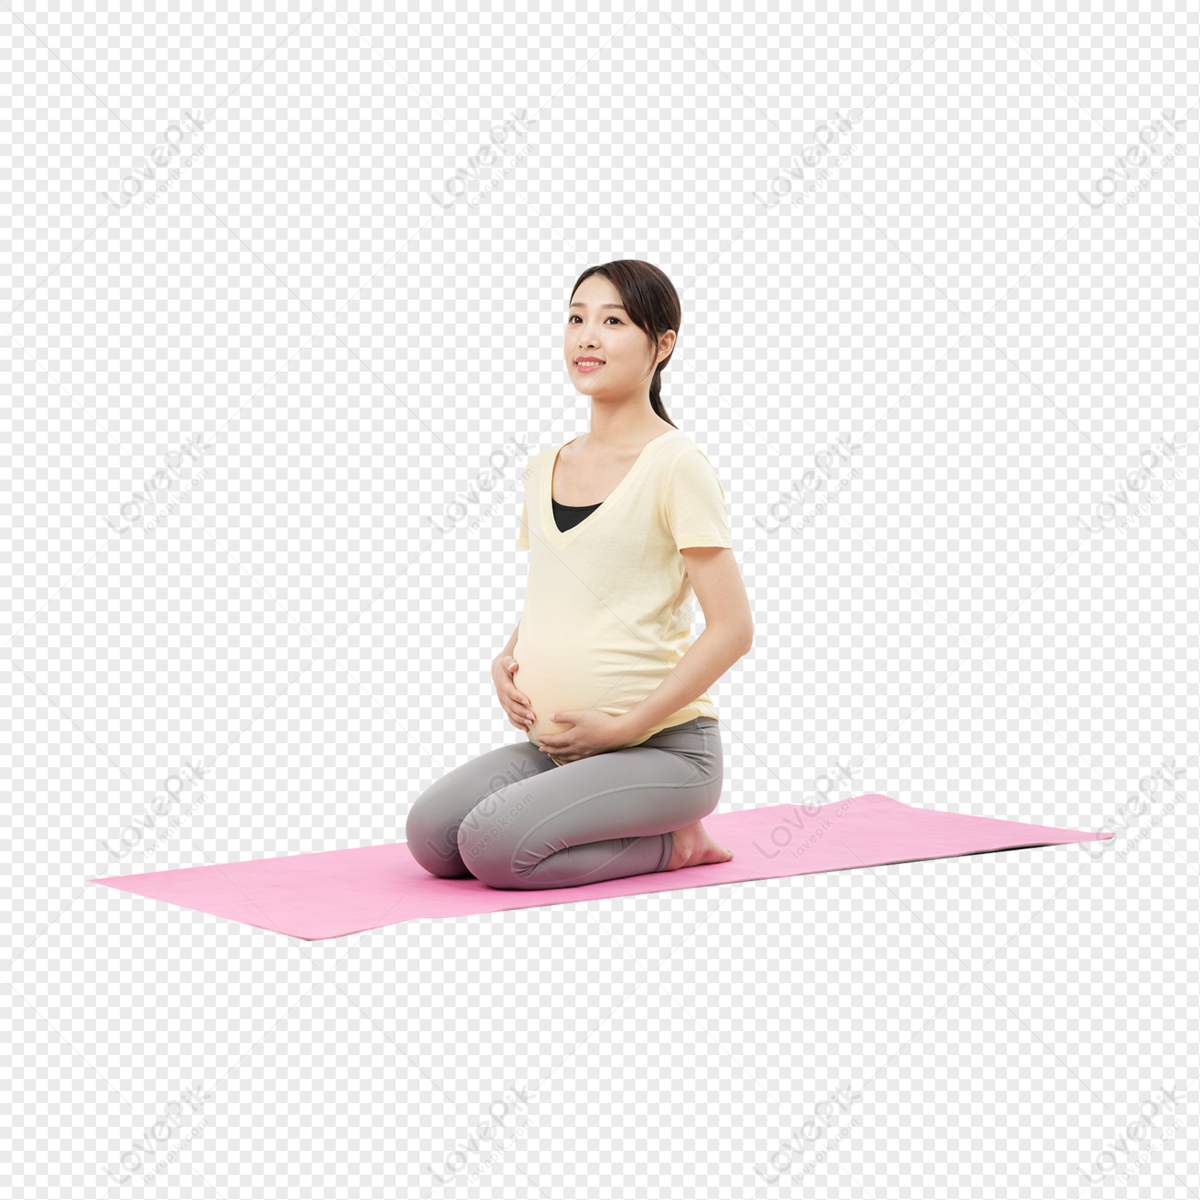 Pregnant Women Doing Yoga Exercises, Pregnant Exercise, Material